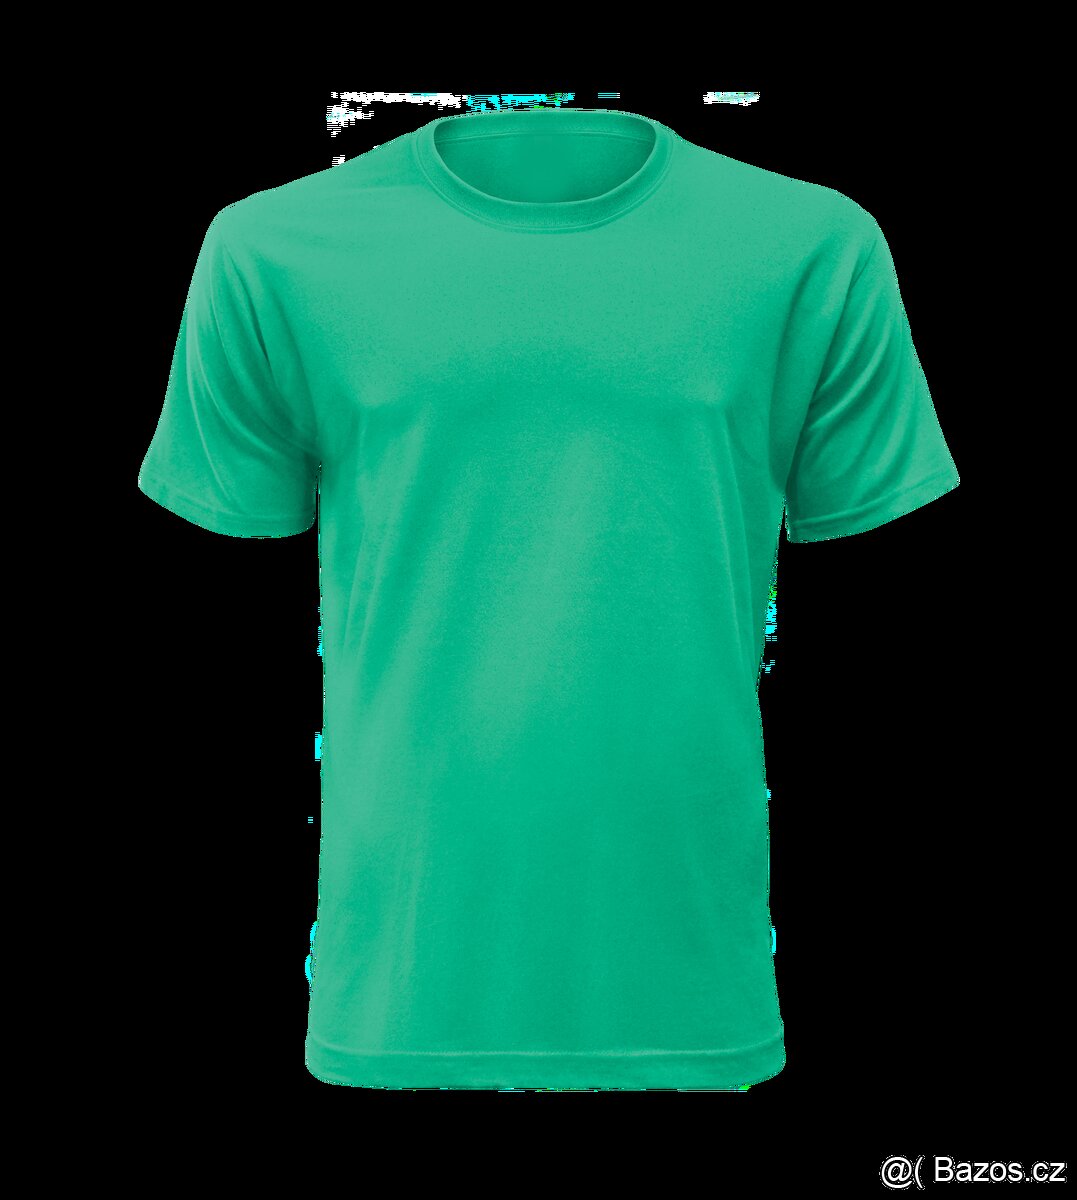 Zelené UNISEX tričko - Velikost XXL a XXXL. Po 100ks